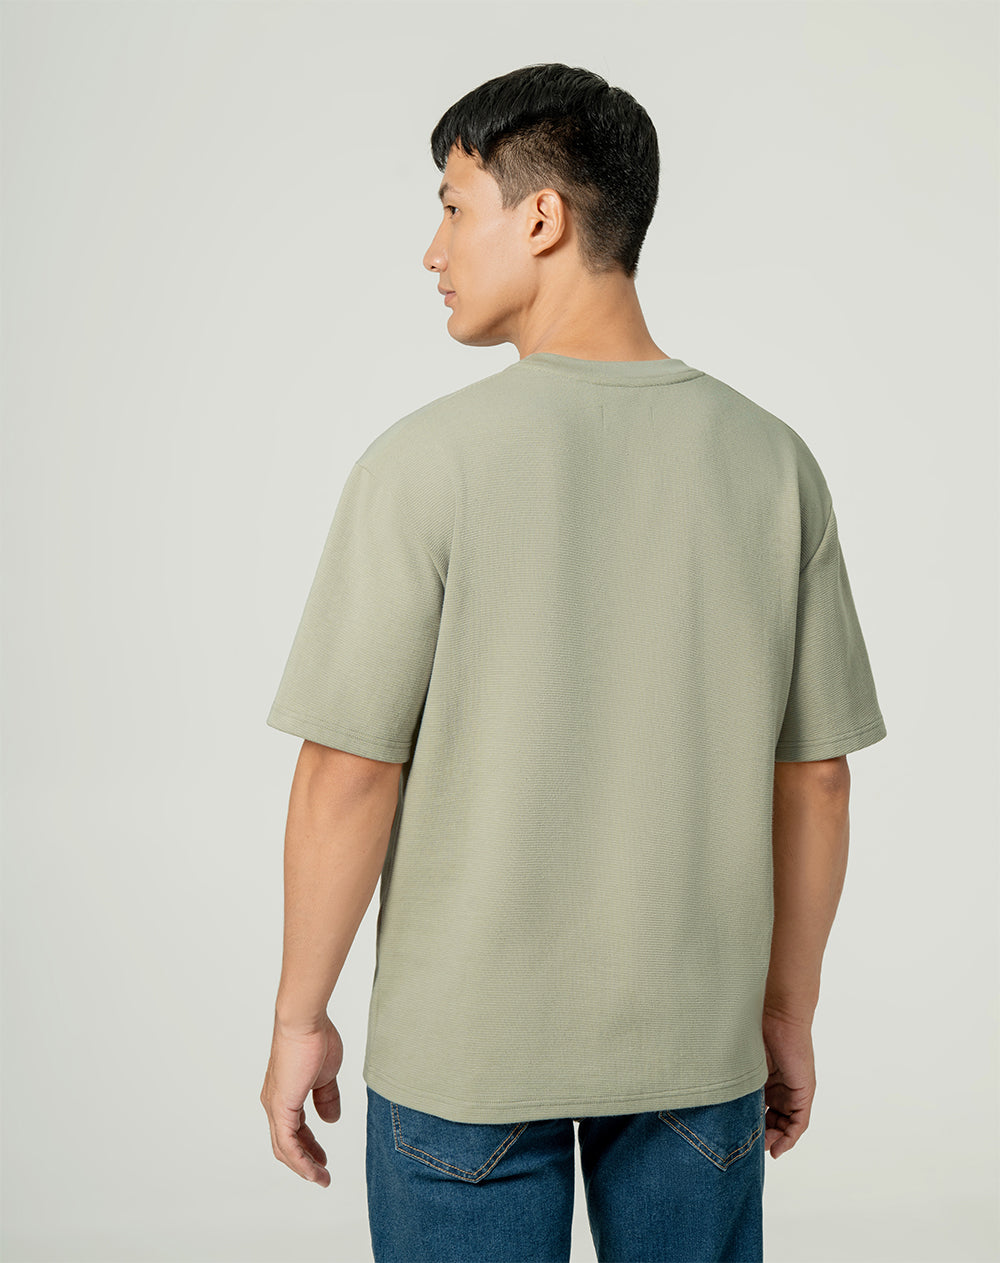 Camiseta loose fit manga corta verde